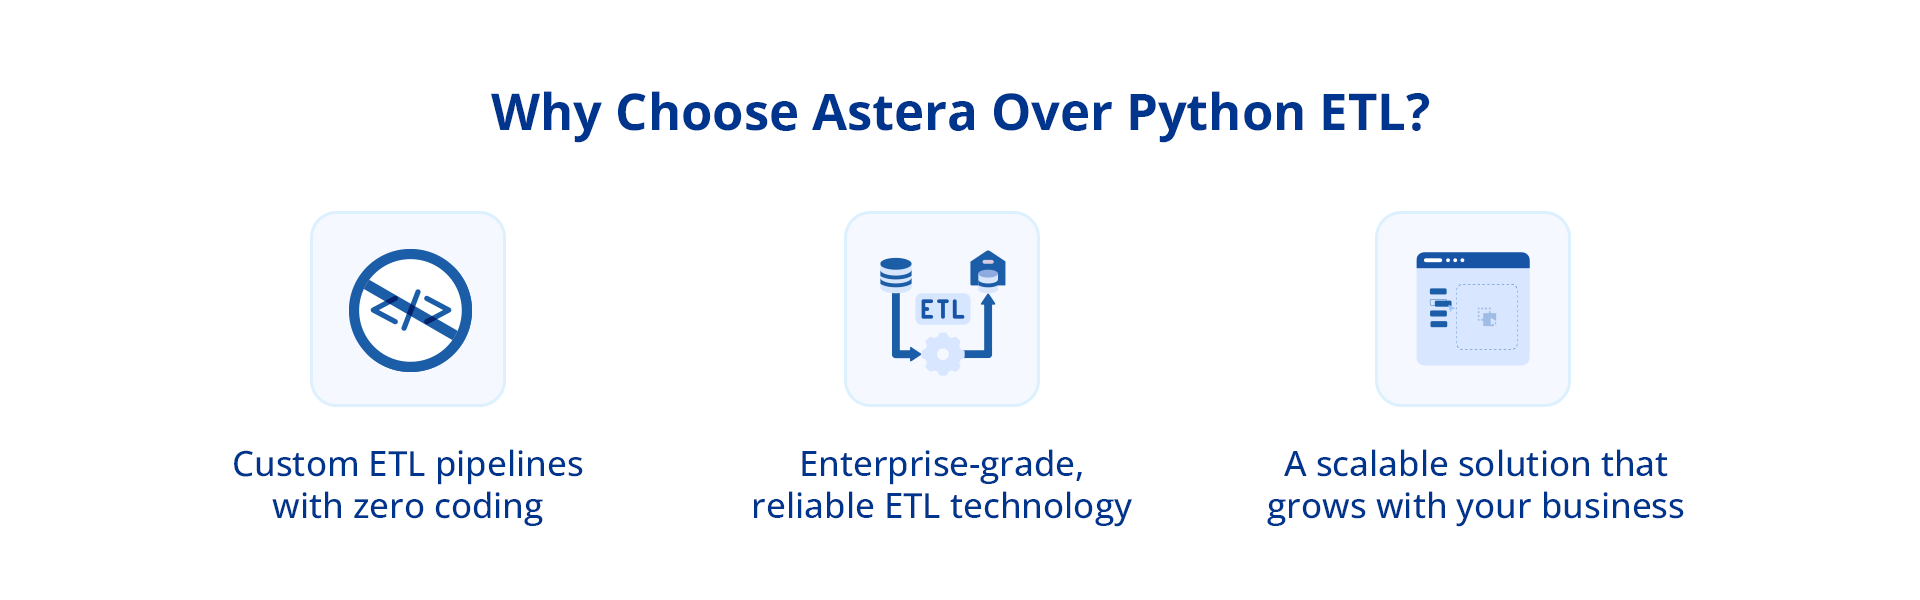 An image highlighting Astera's advantages over Python ETL.